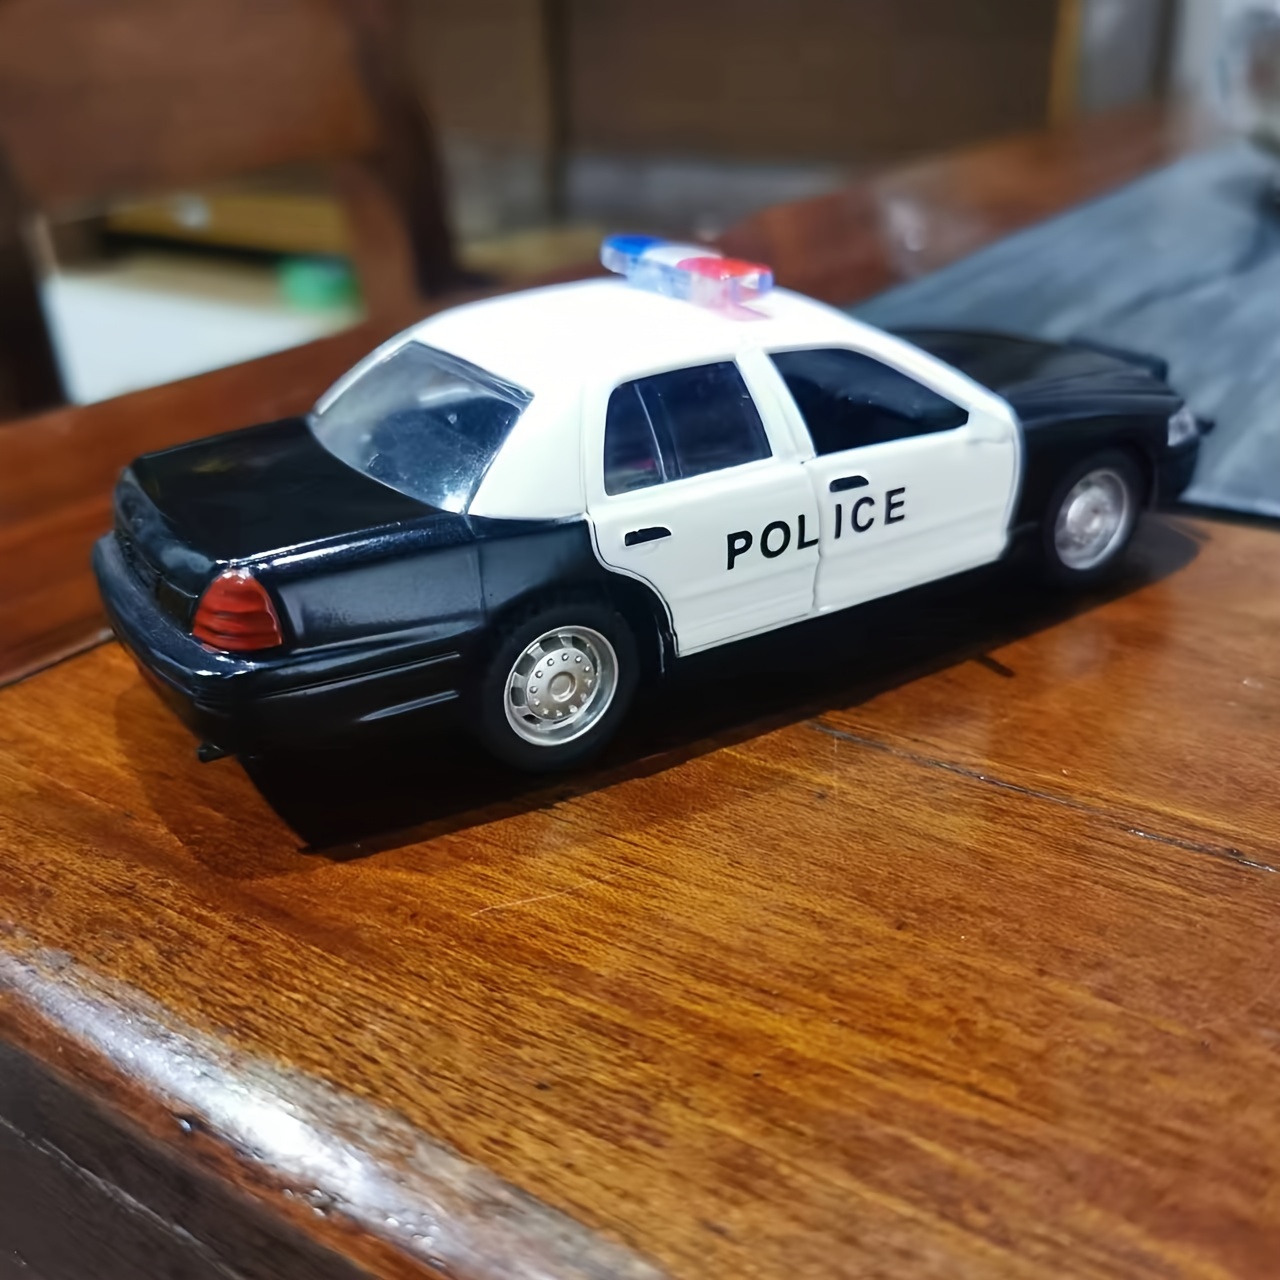 Die Cast Pullback Police Car 4.5